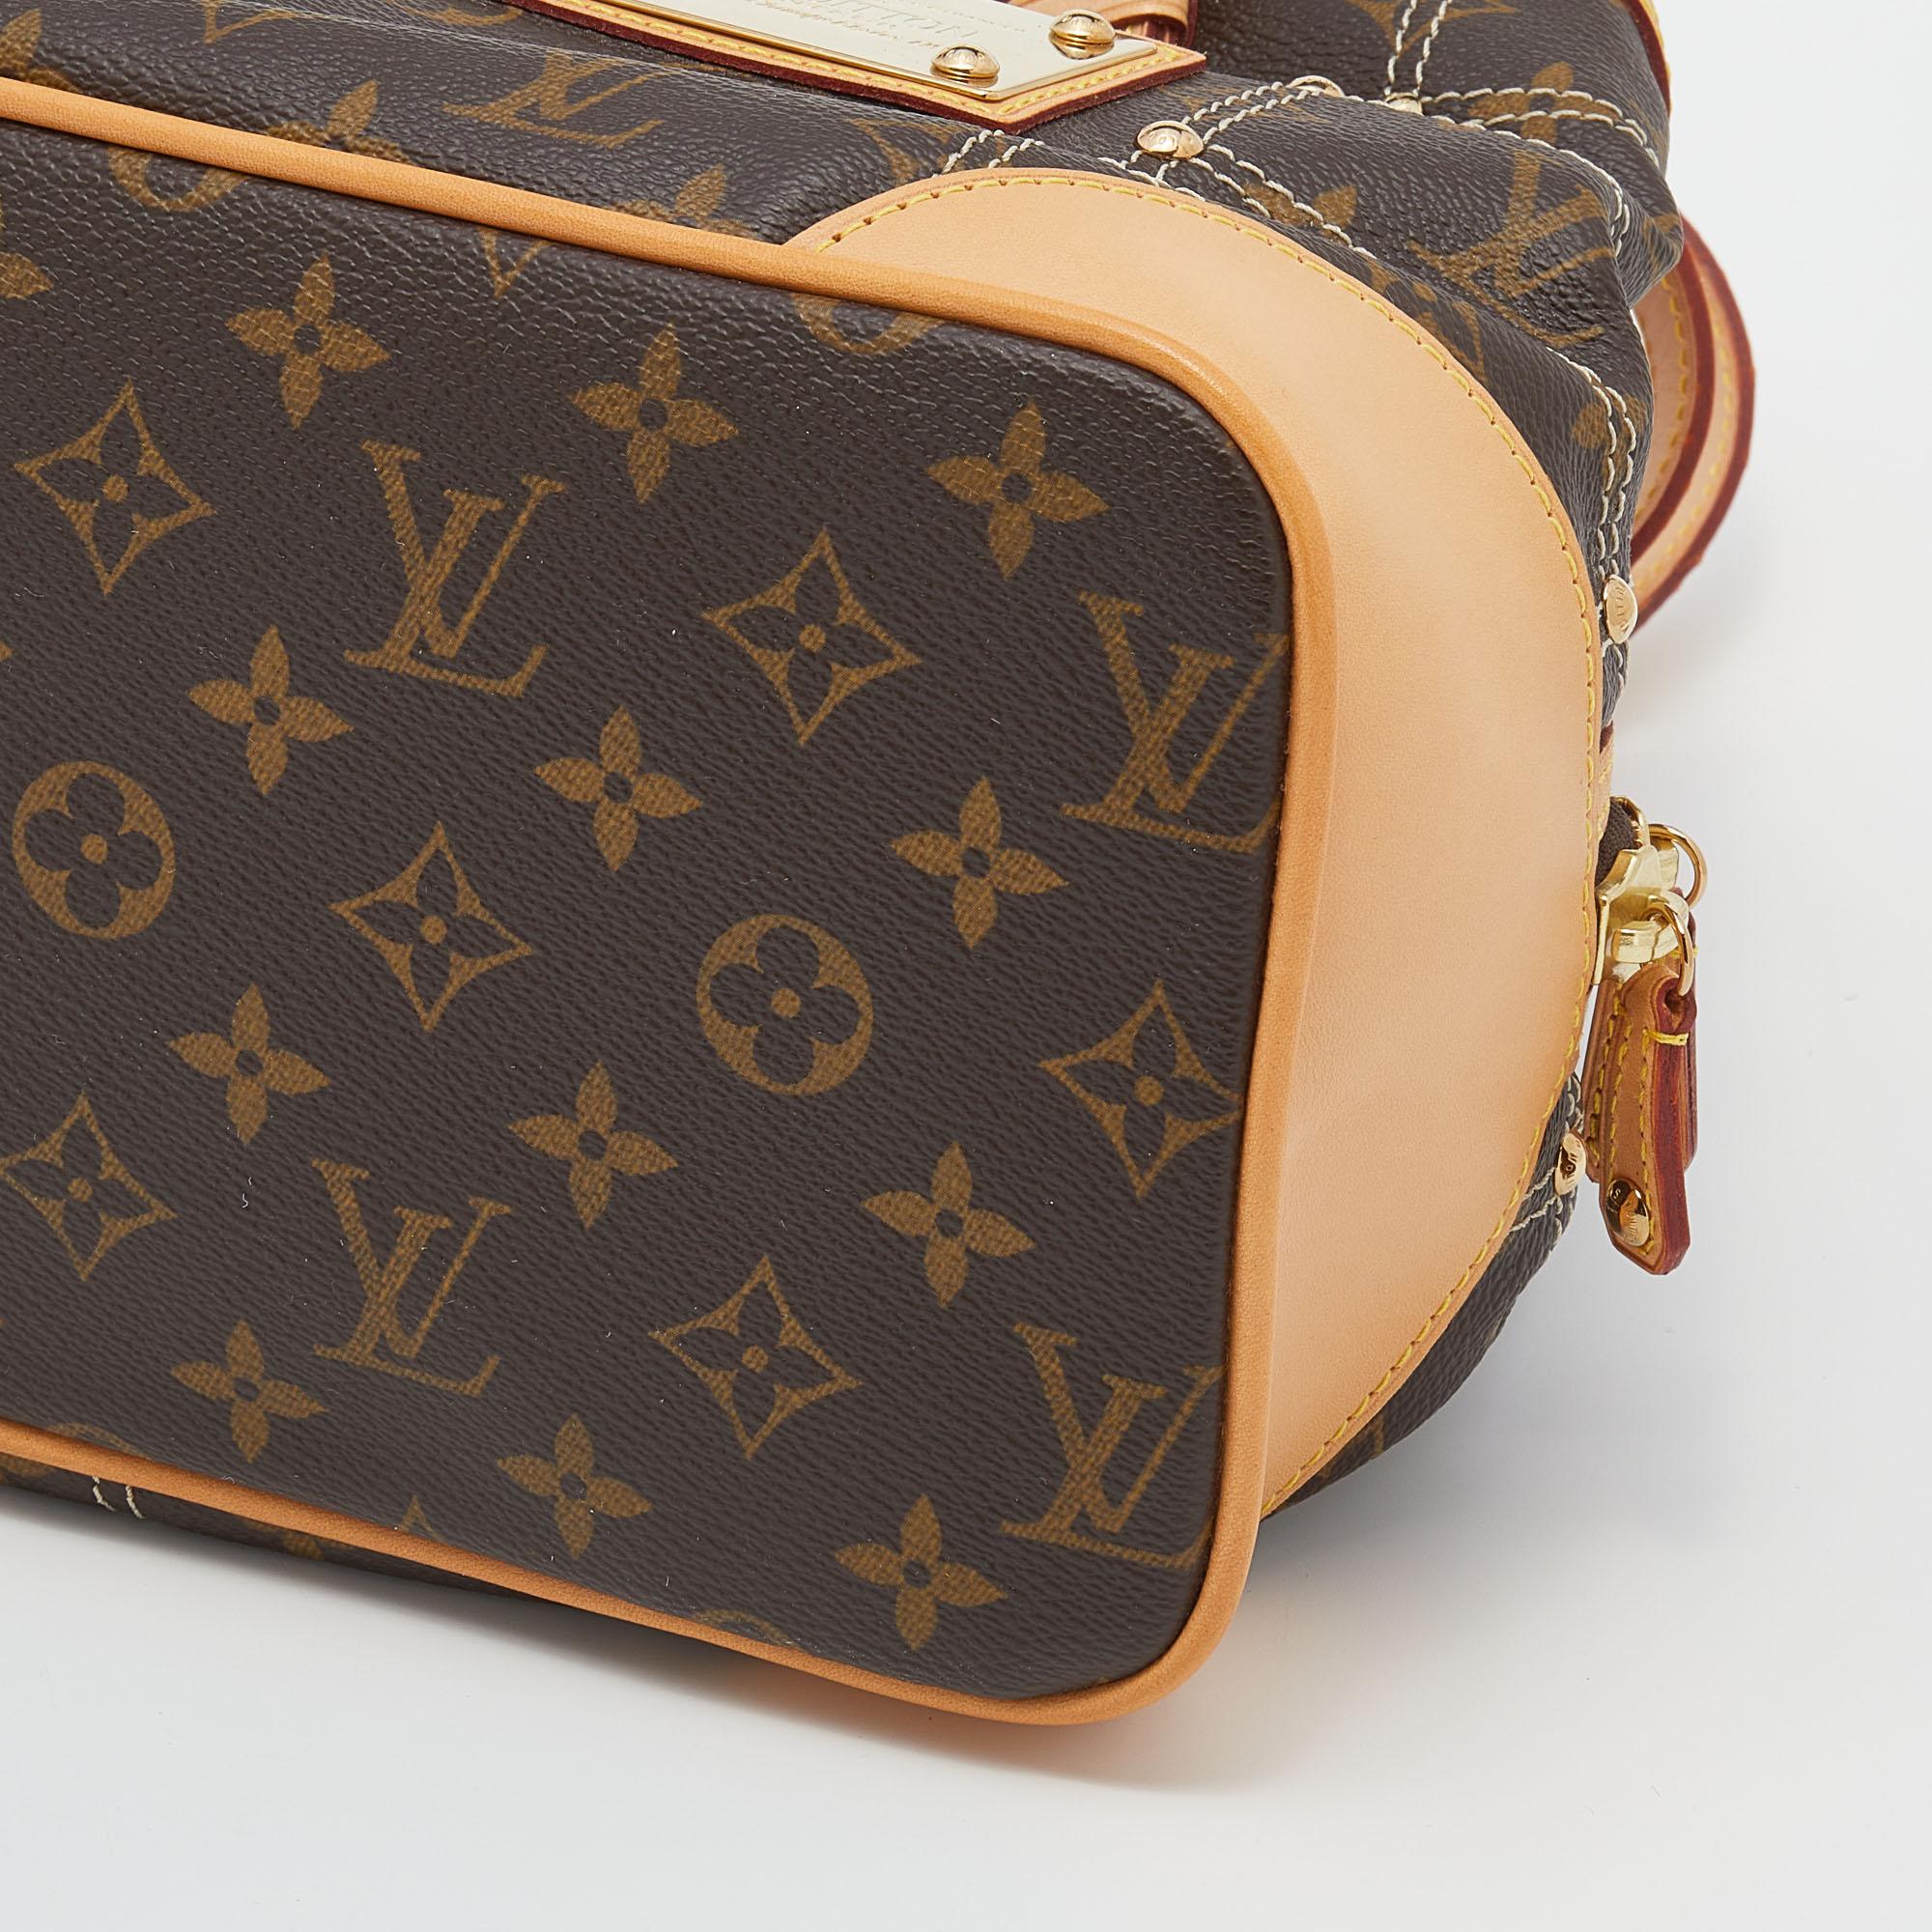 Louis Vuitton Monogram Canvas Limited Edition Riveting Bag 2